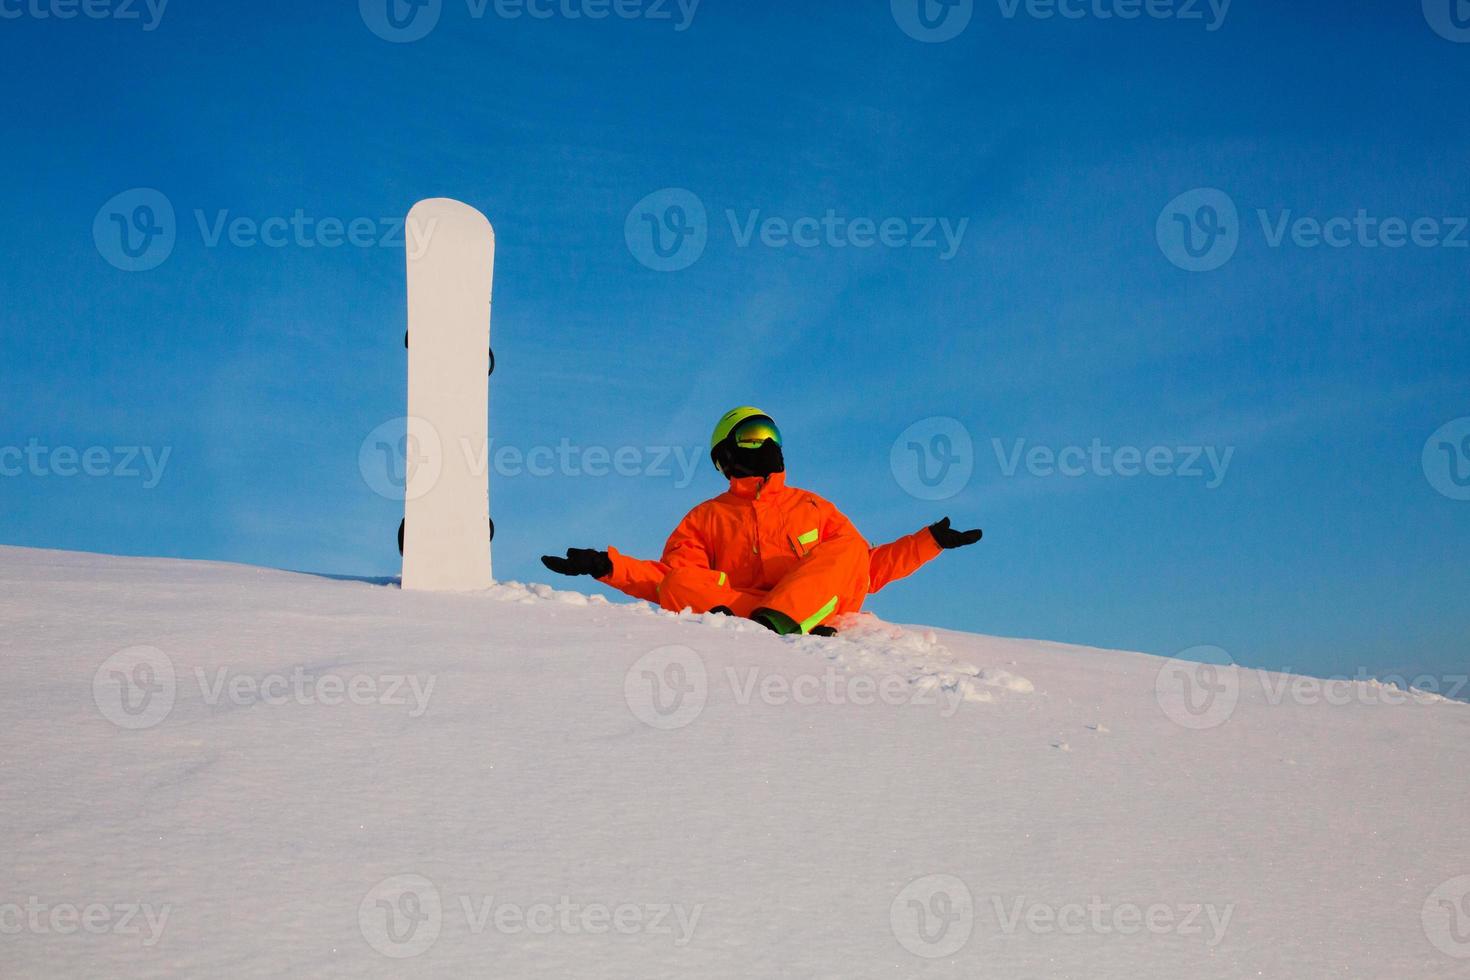 snowboarder freerider com snowboard branco sentado no topo da pista de esqui foto